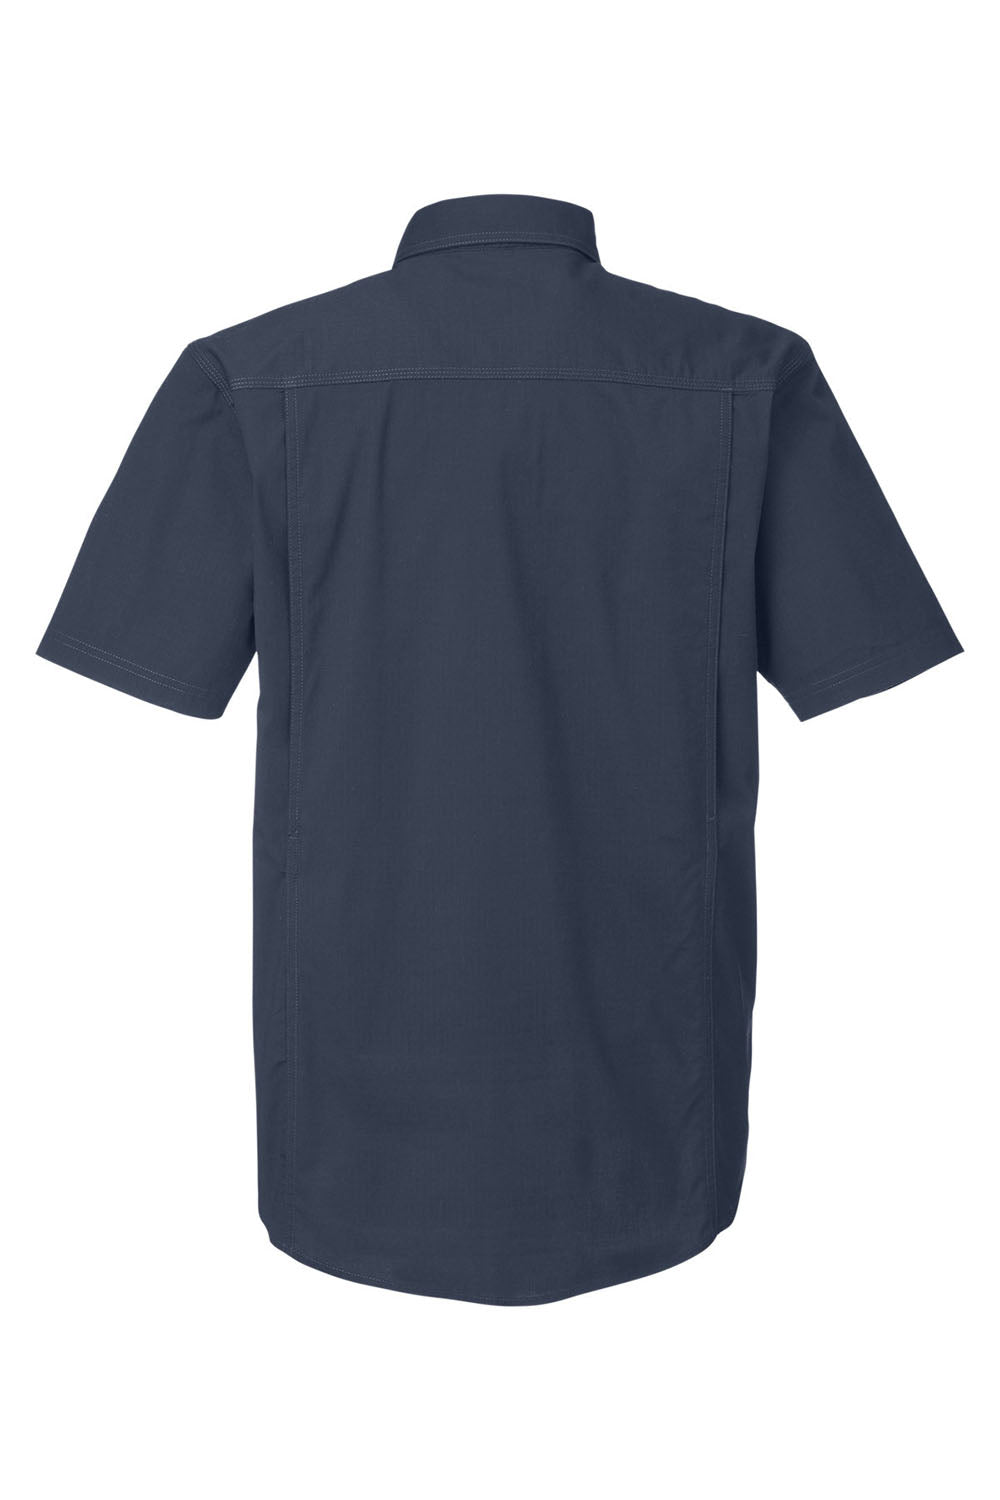 Dri Duck 4451DD Mens Craftsman Ripstop Short Sleeve Button Down Shirt w/ Double Pockets Deep Blue Flat Back